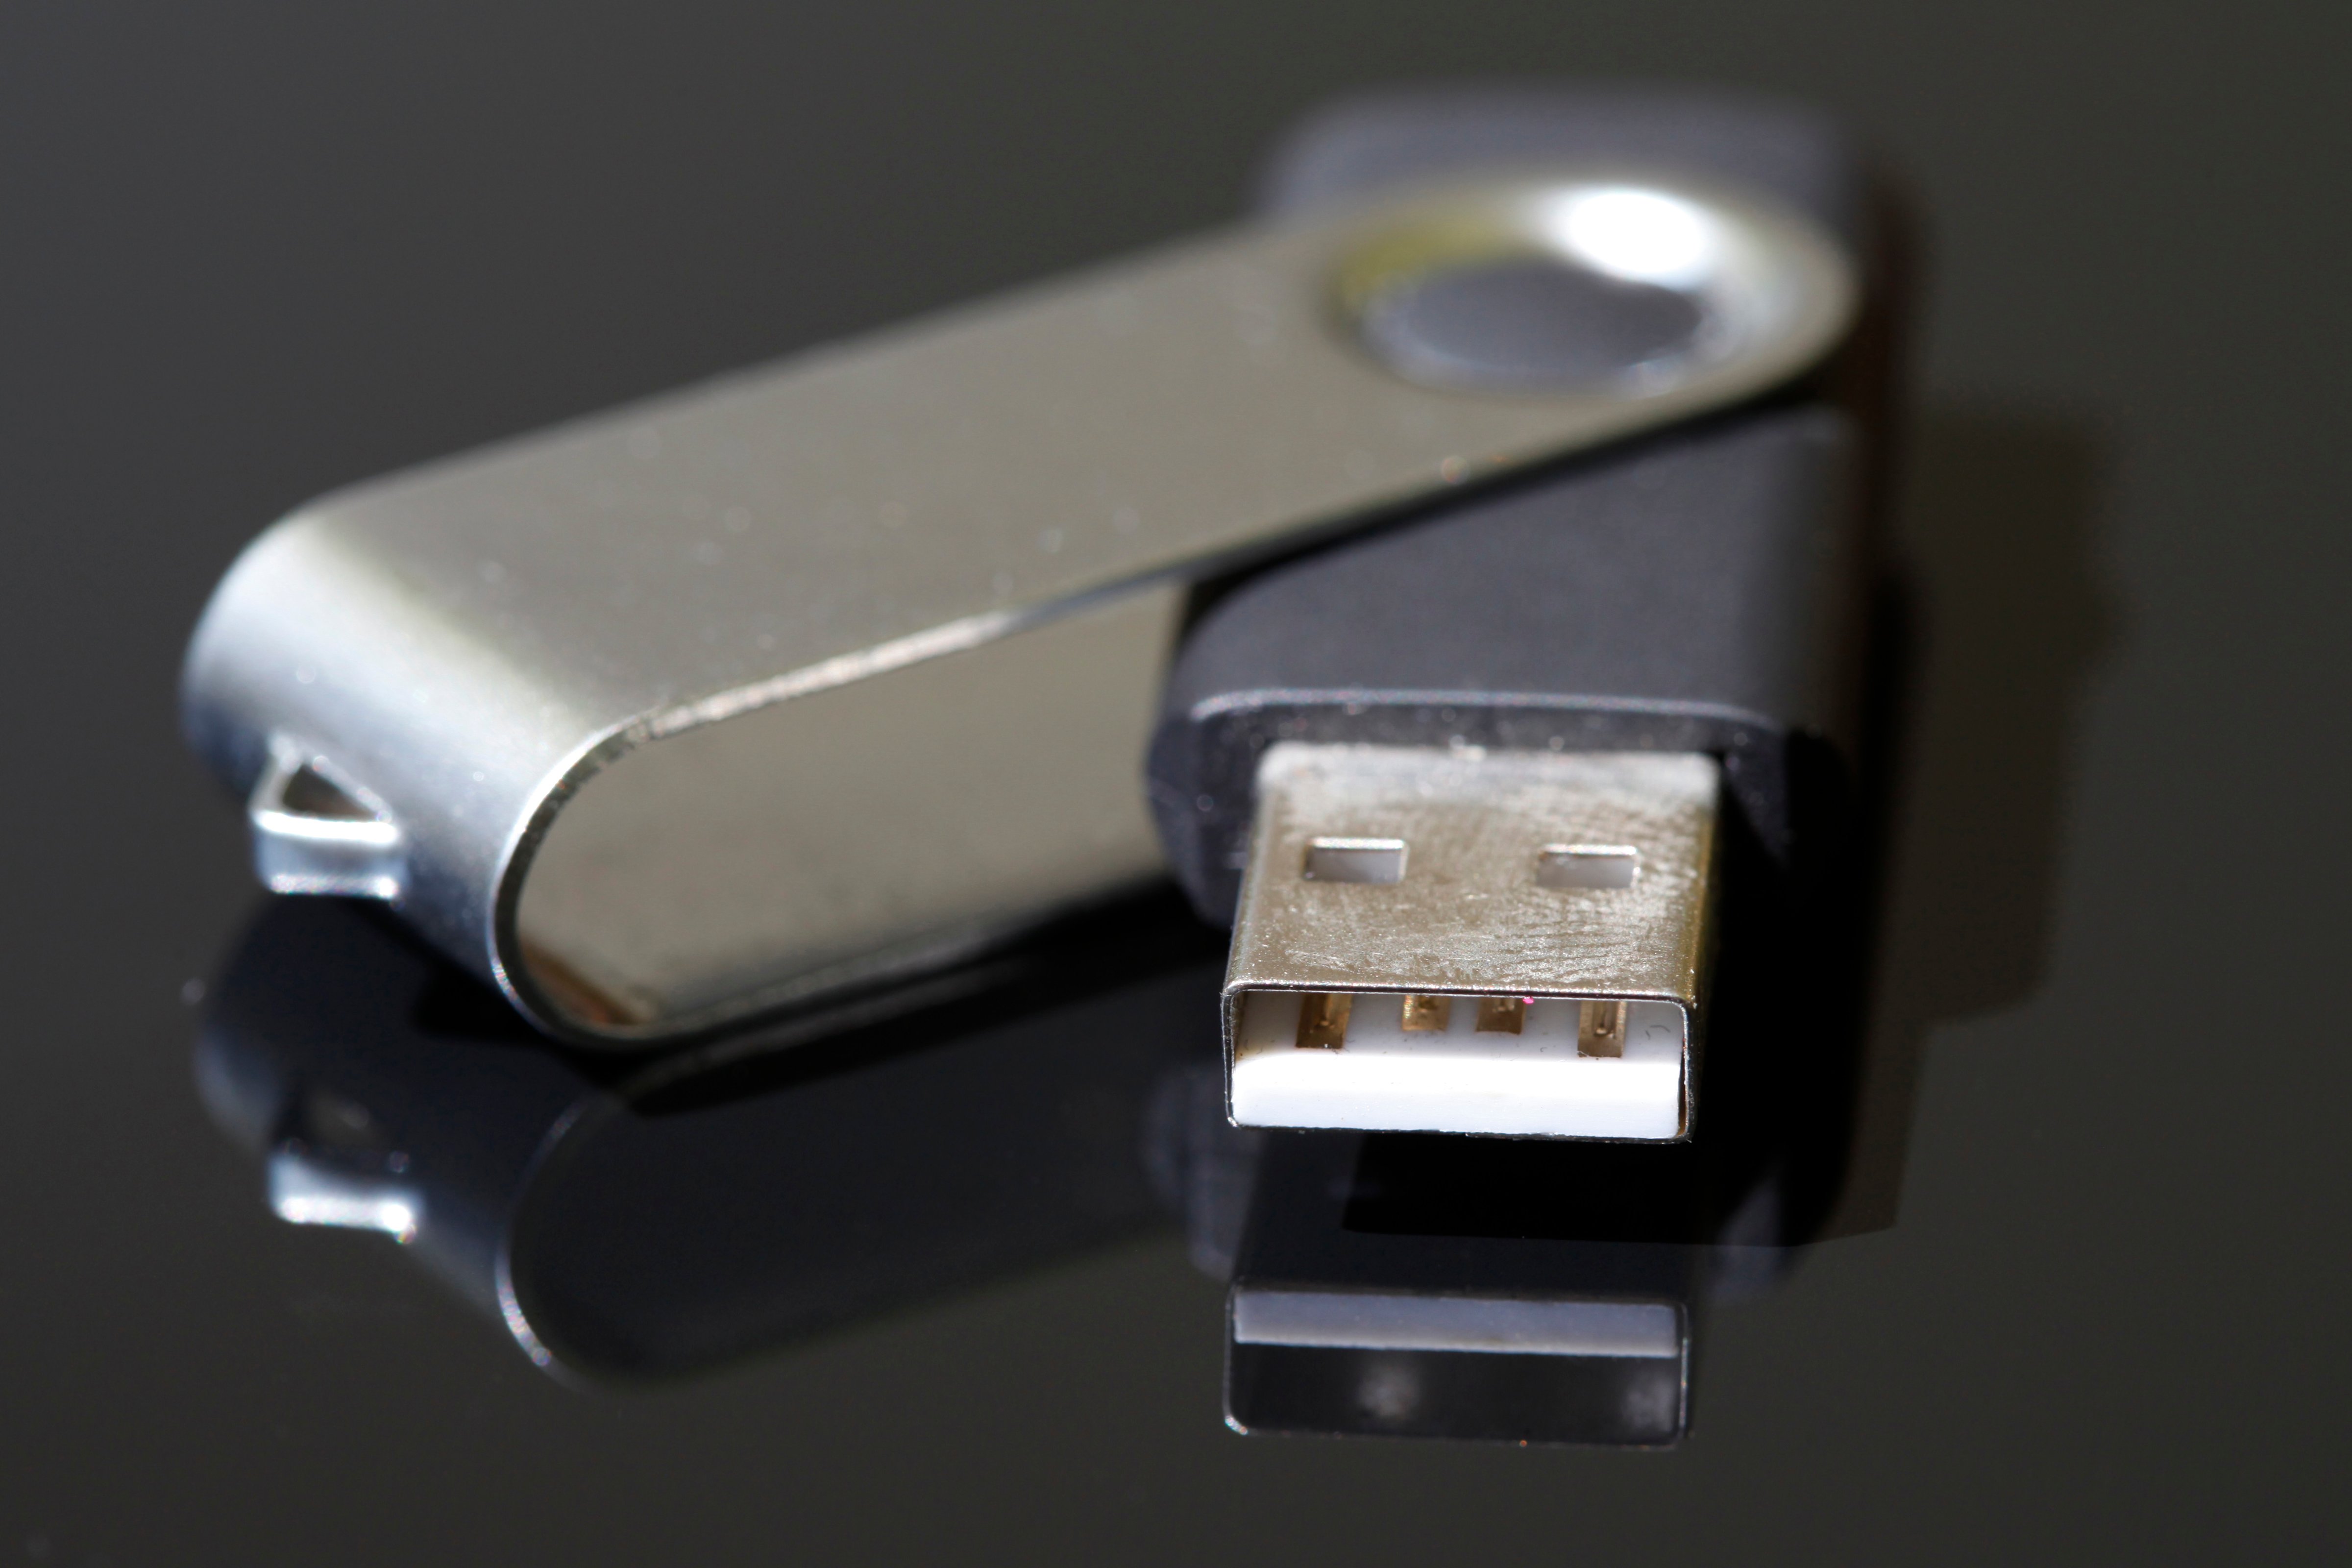 A Universal Serial Bus (USB) memory stick